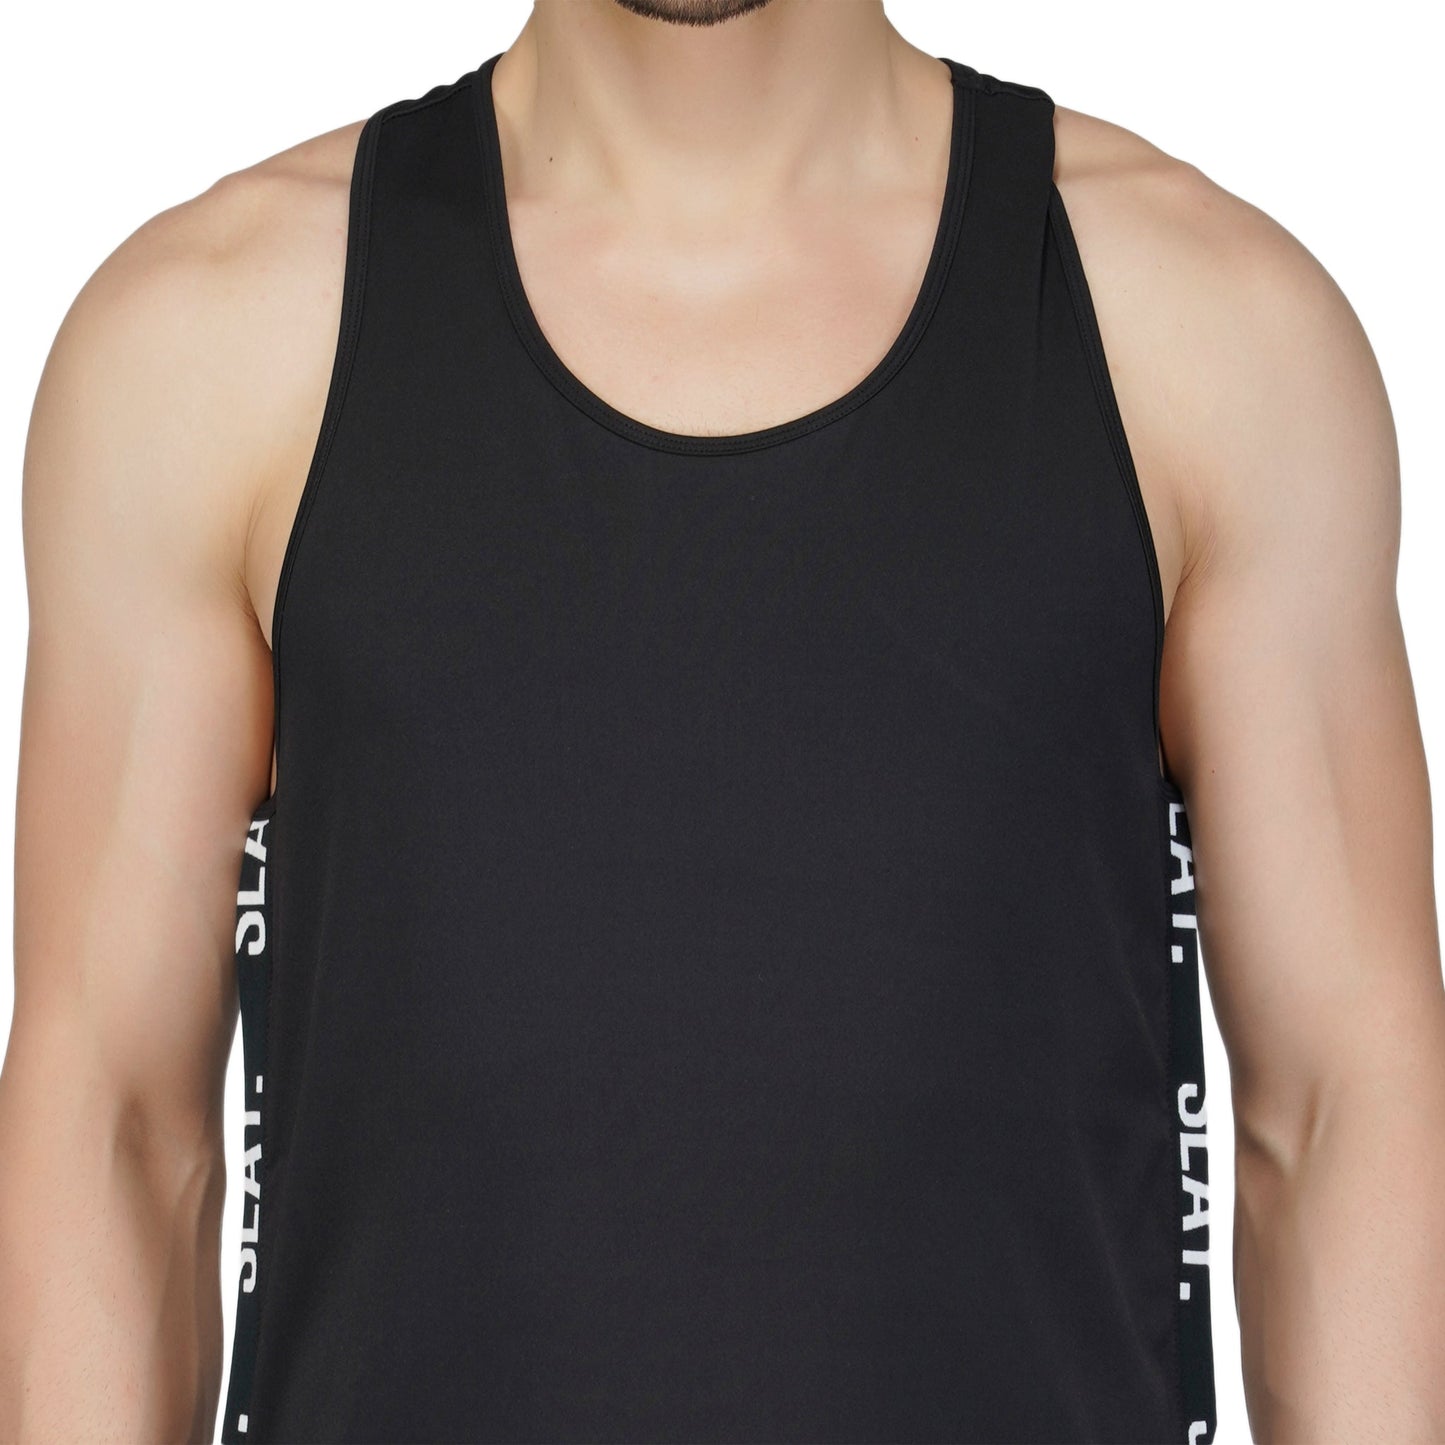 SLAY. Men's Activewear Black Gym Vest (4 way Stretch Fabric)